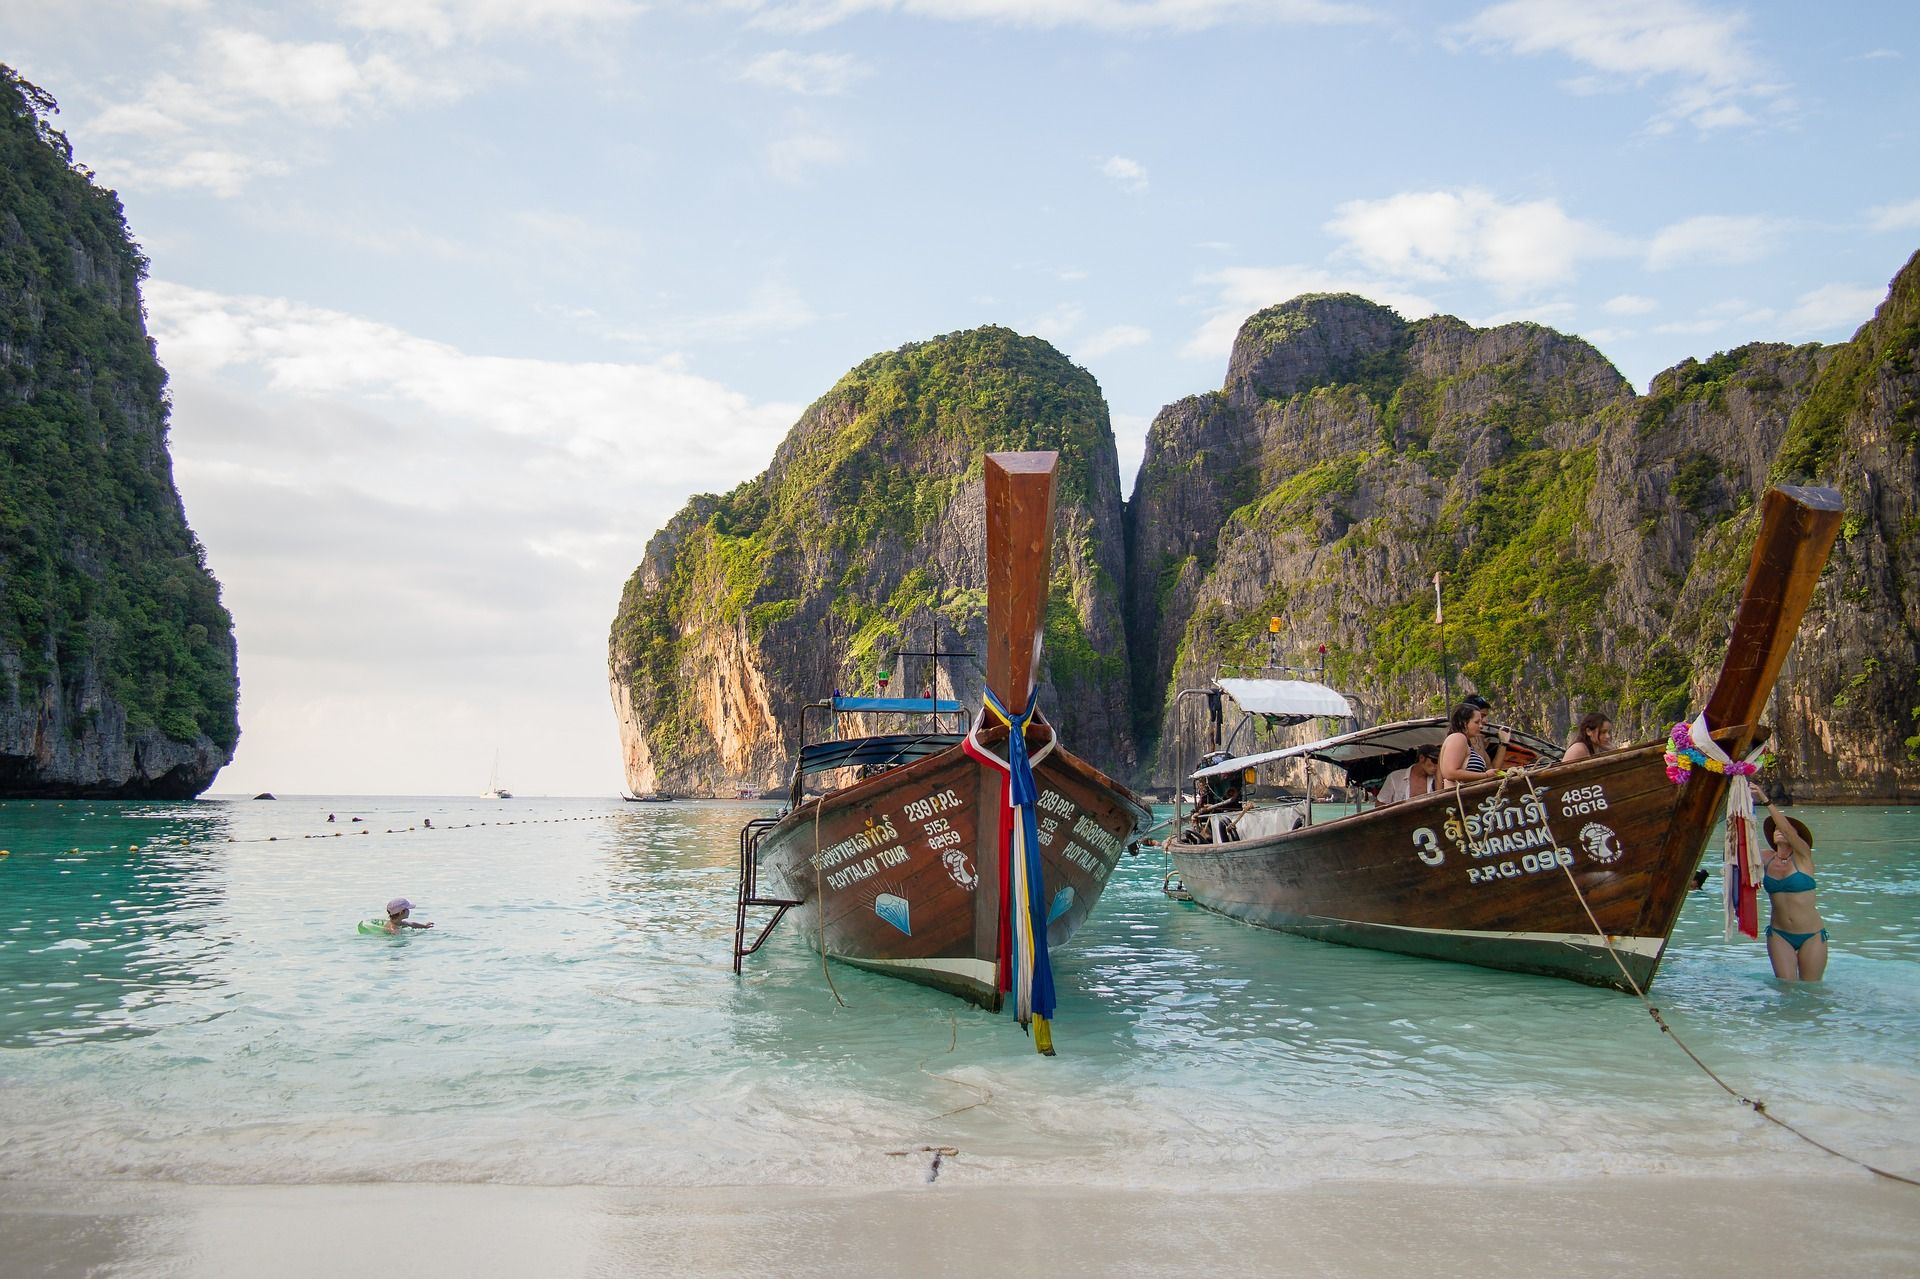 Maya Bay – The-Beach-Strand auf Koh Phi Phi bleibt gesperrt